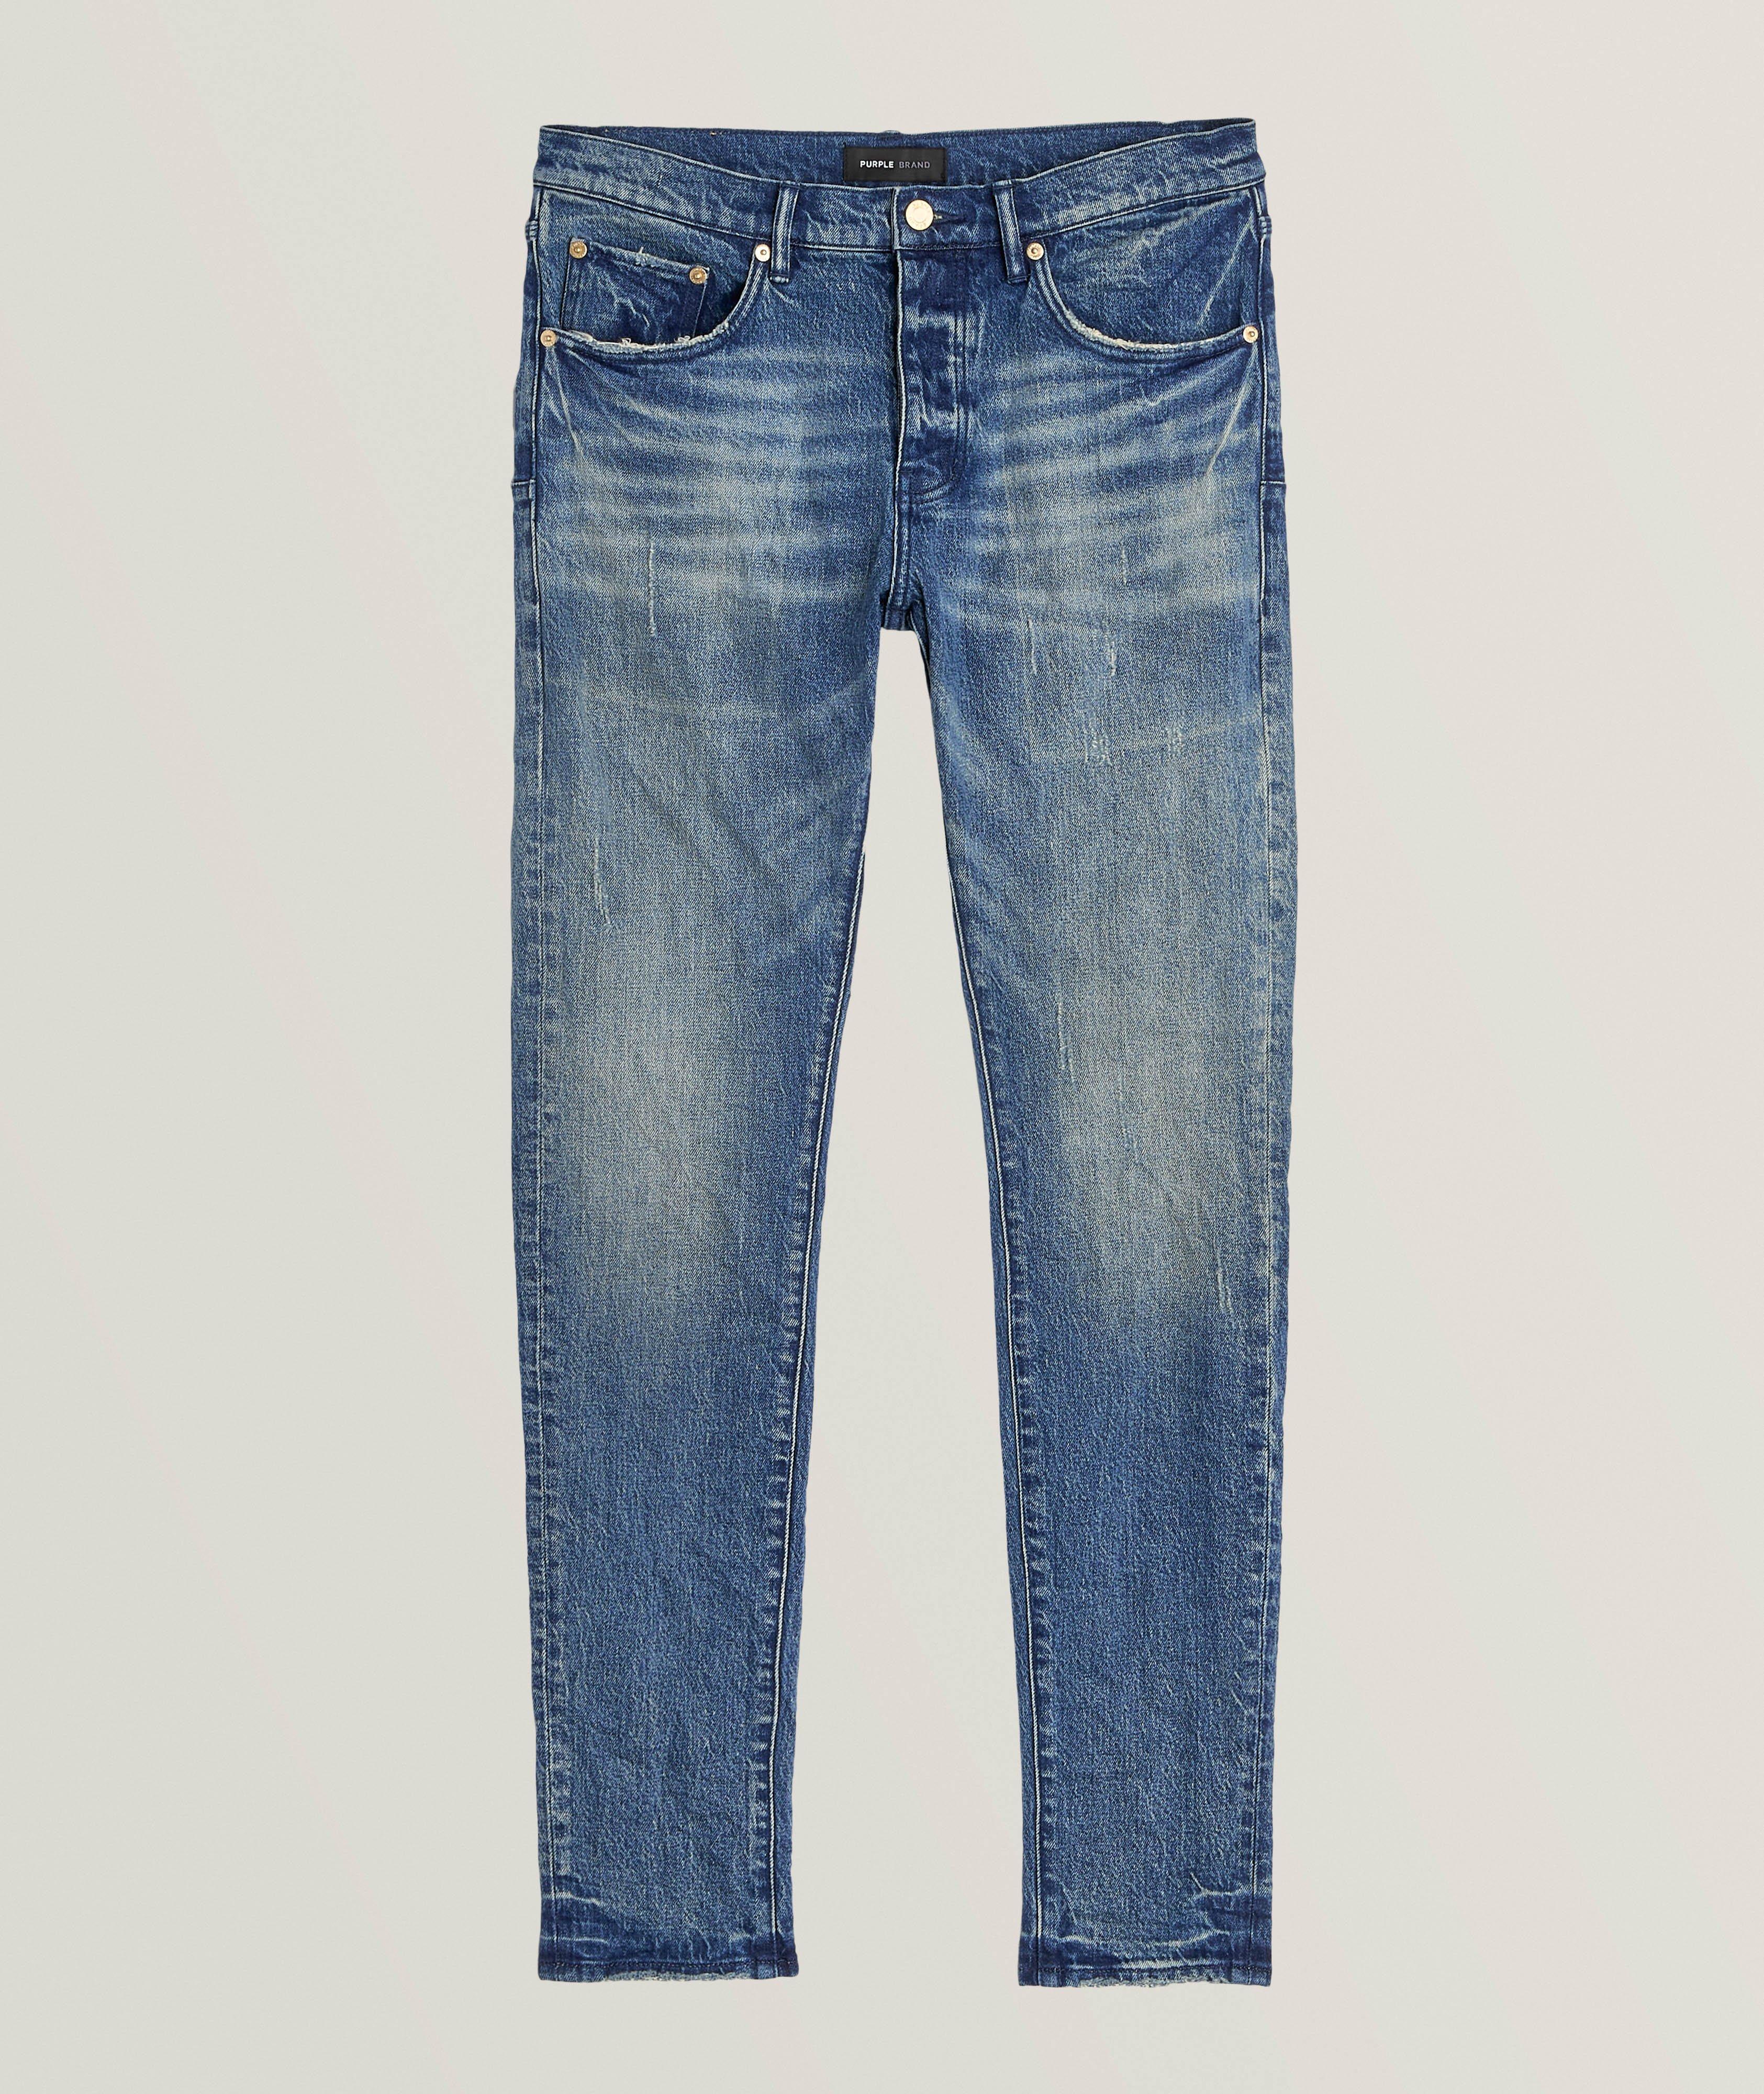 P001 Distressed Western Skinny Jeans image 0